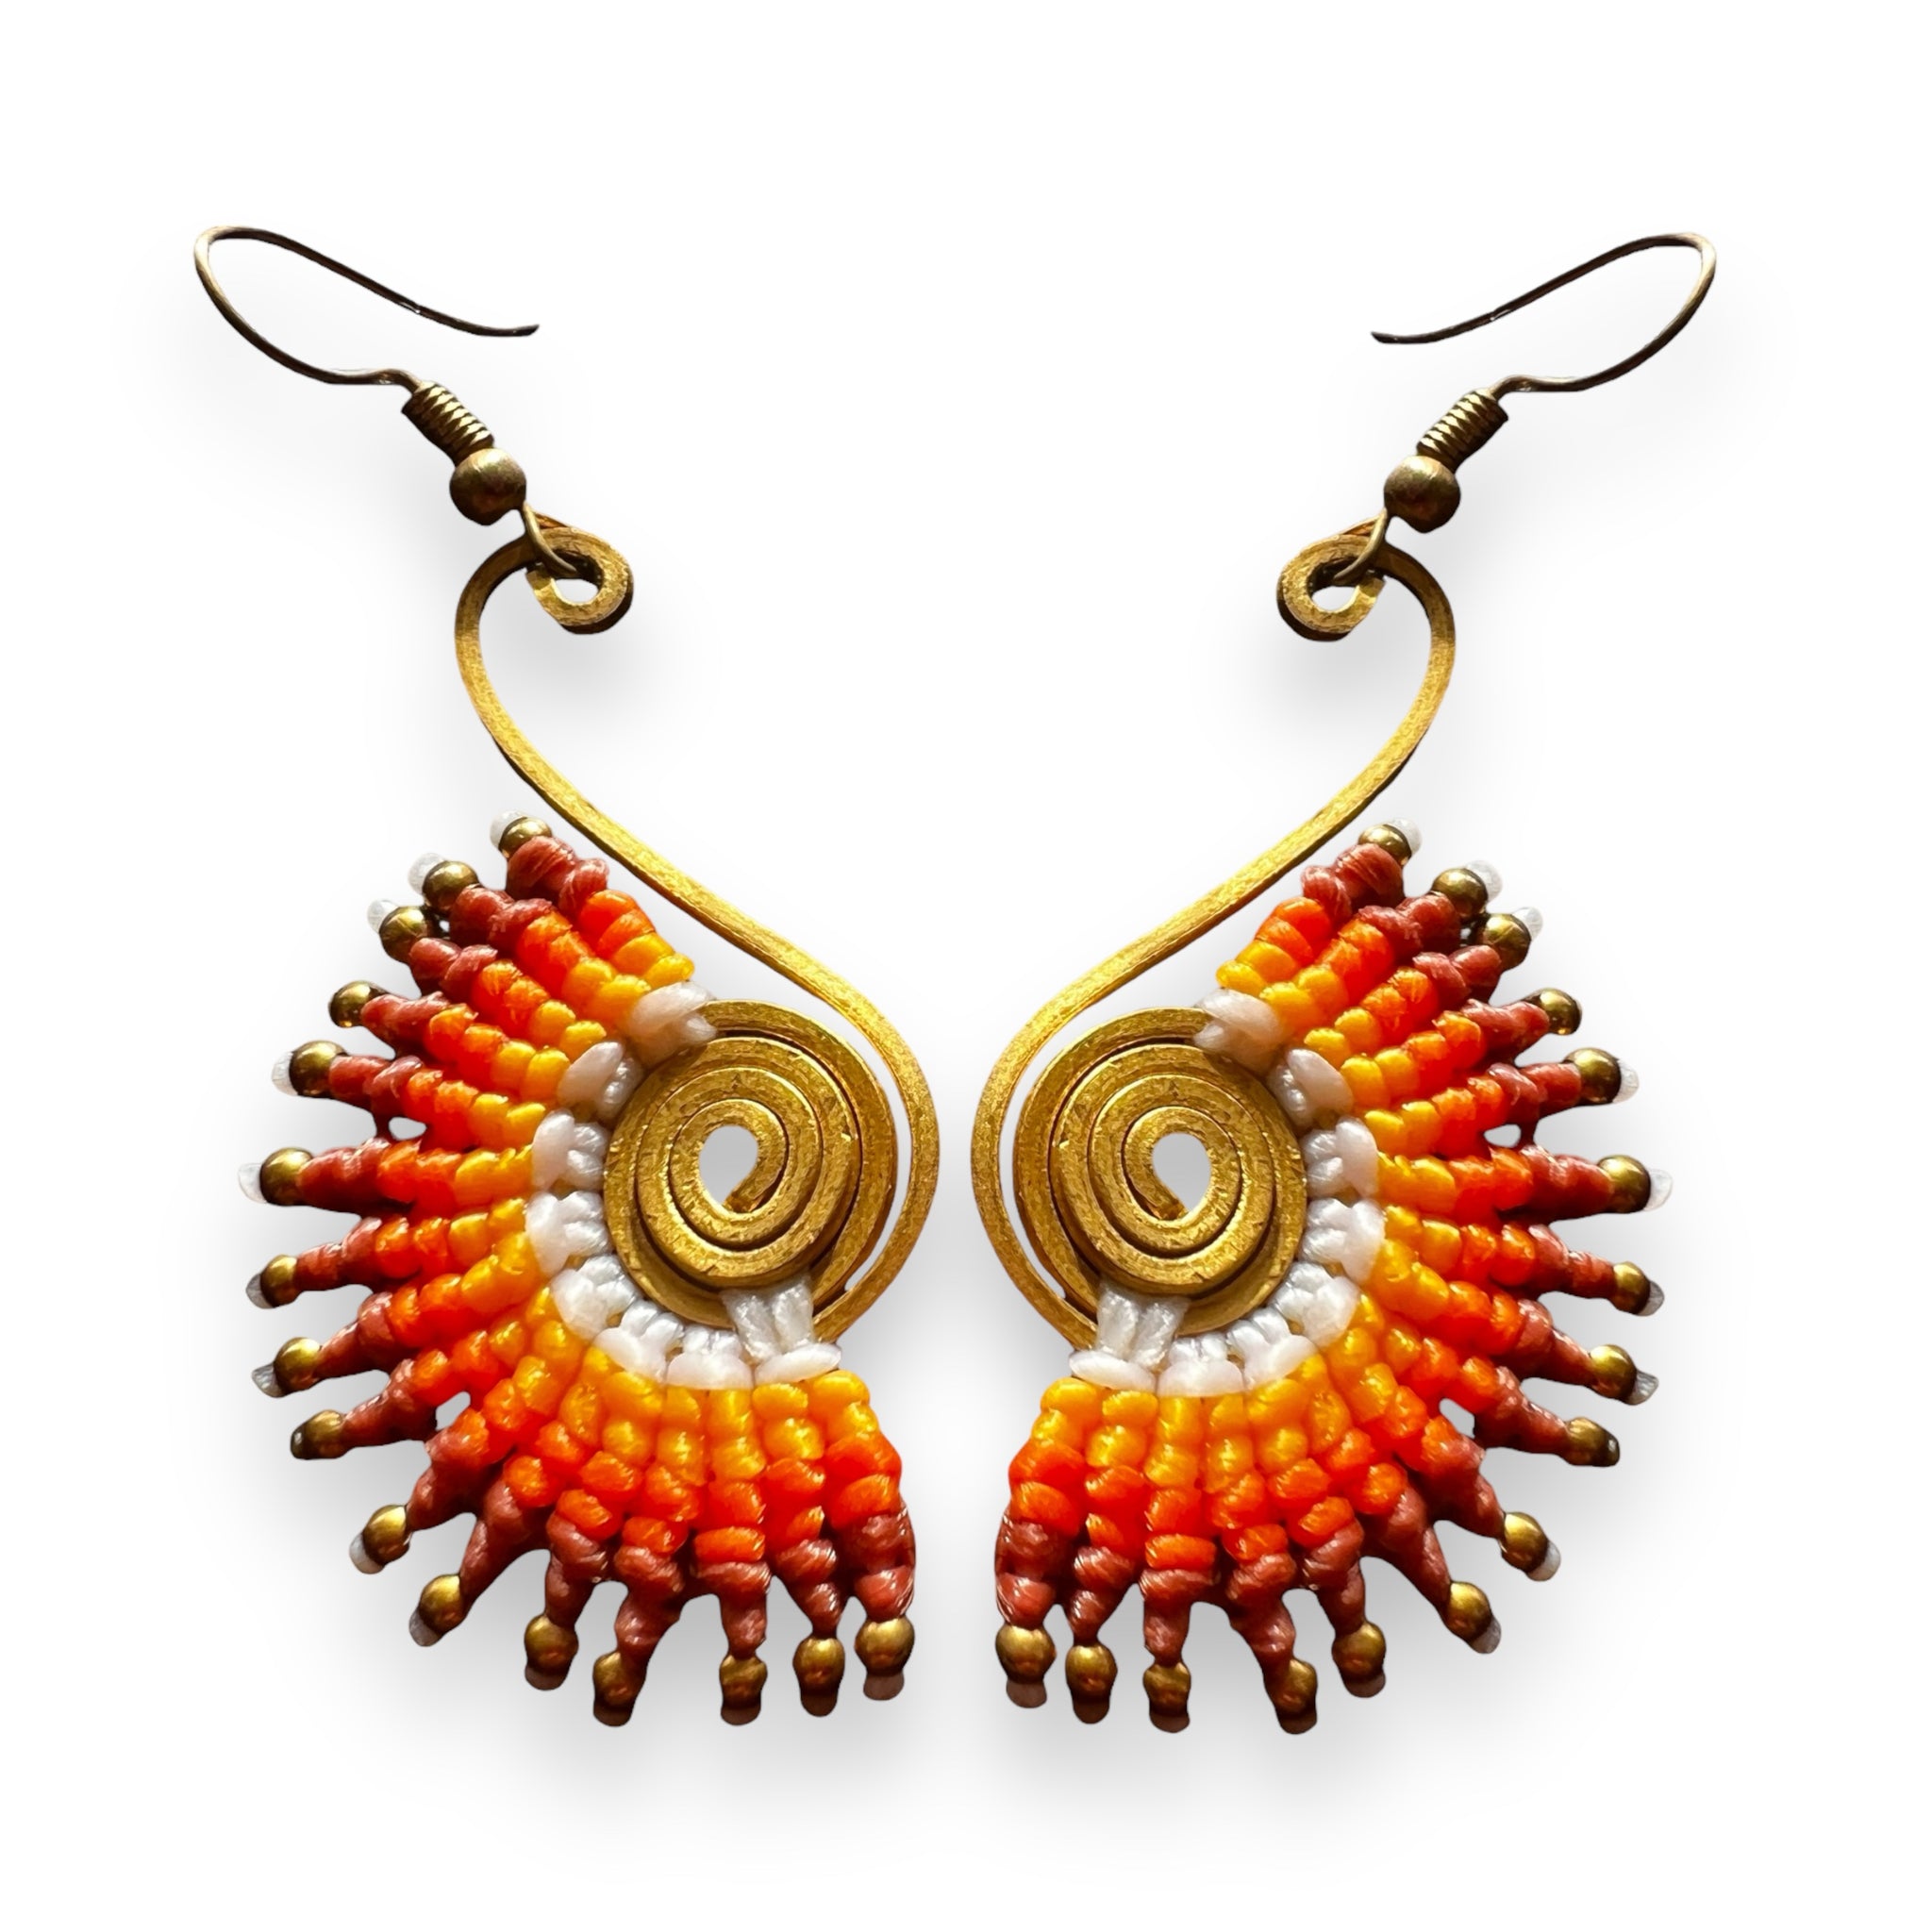 Handmade Earrings Art of Thread Embroidery Jewelry